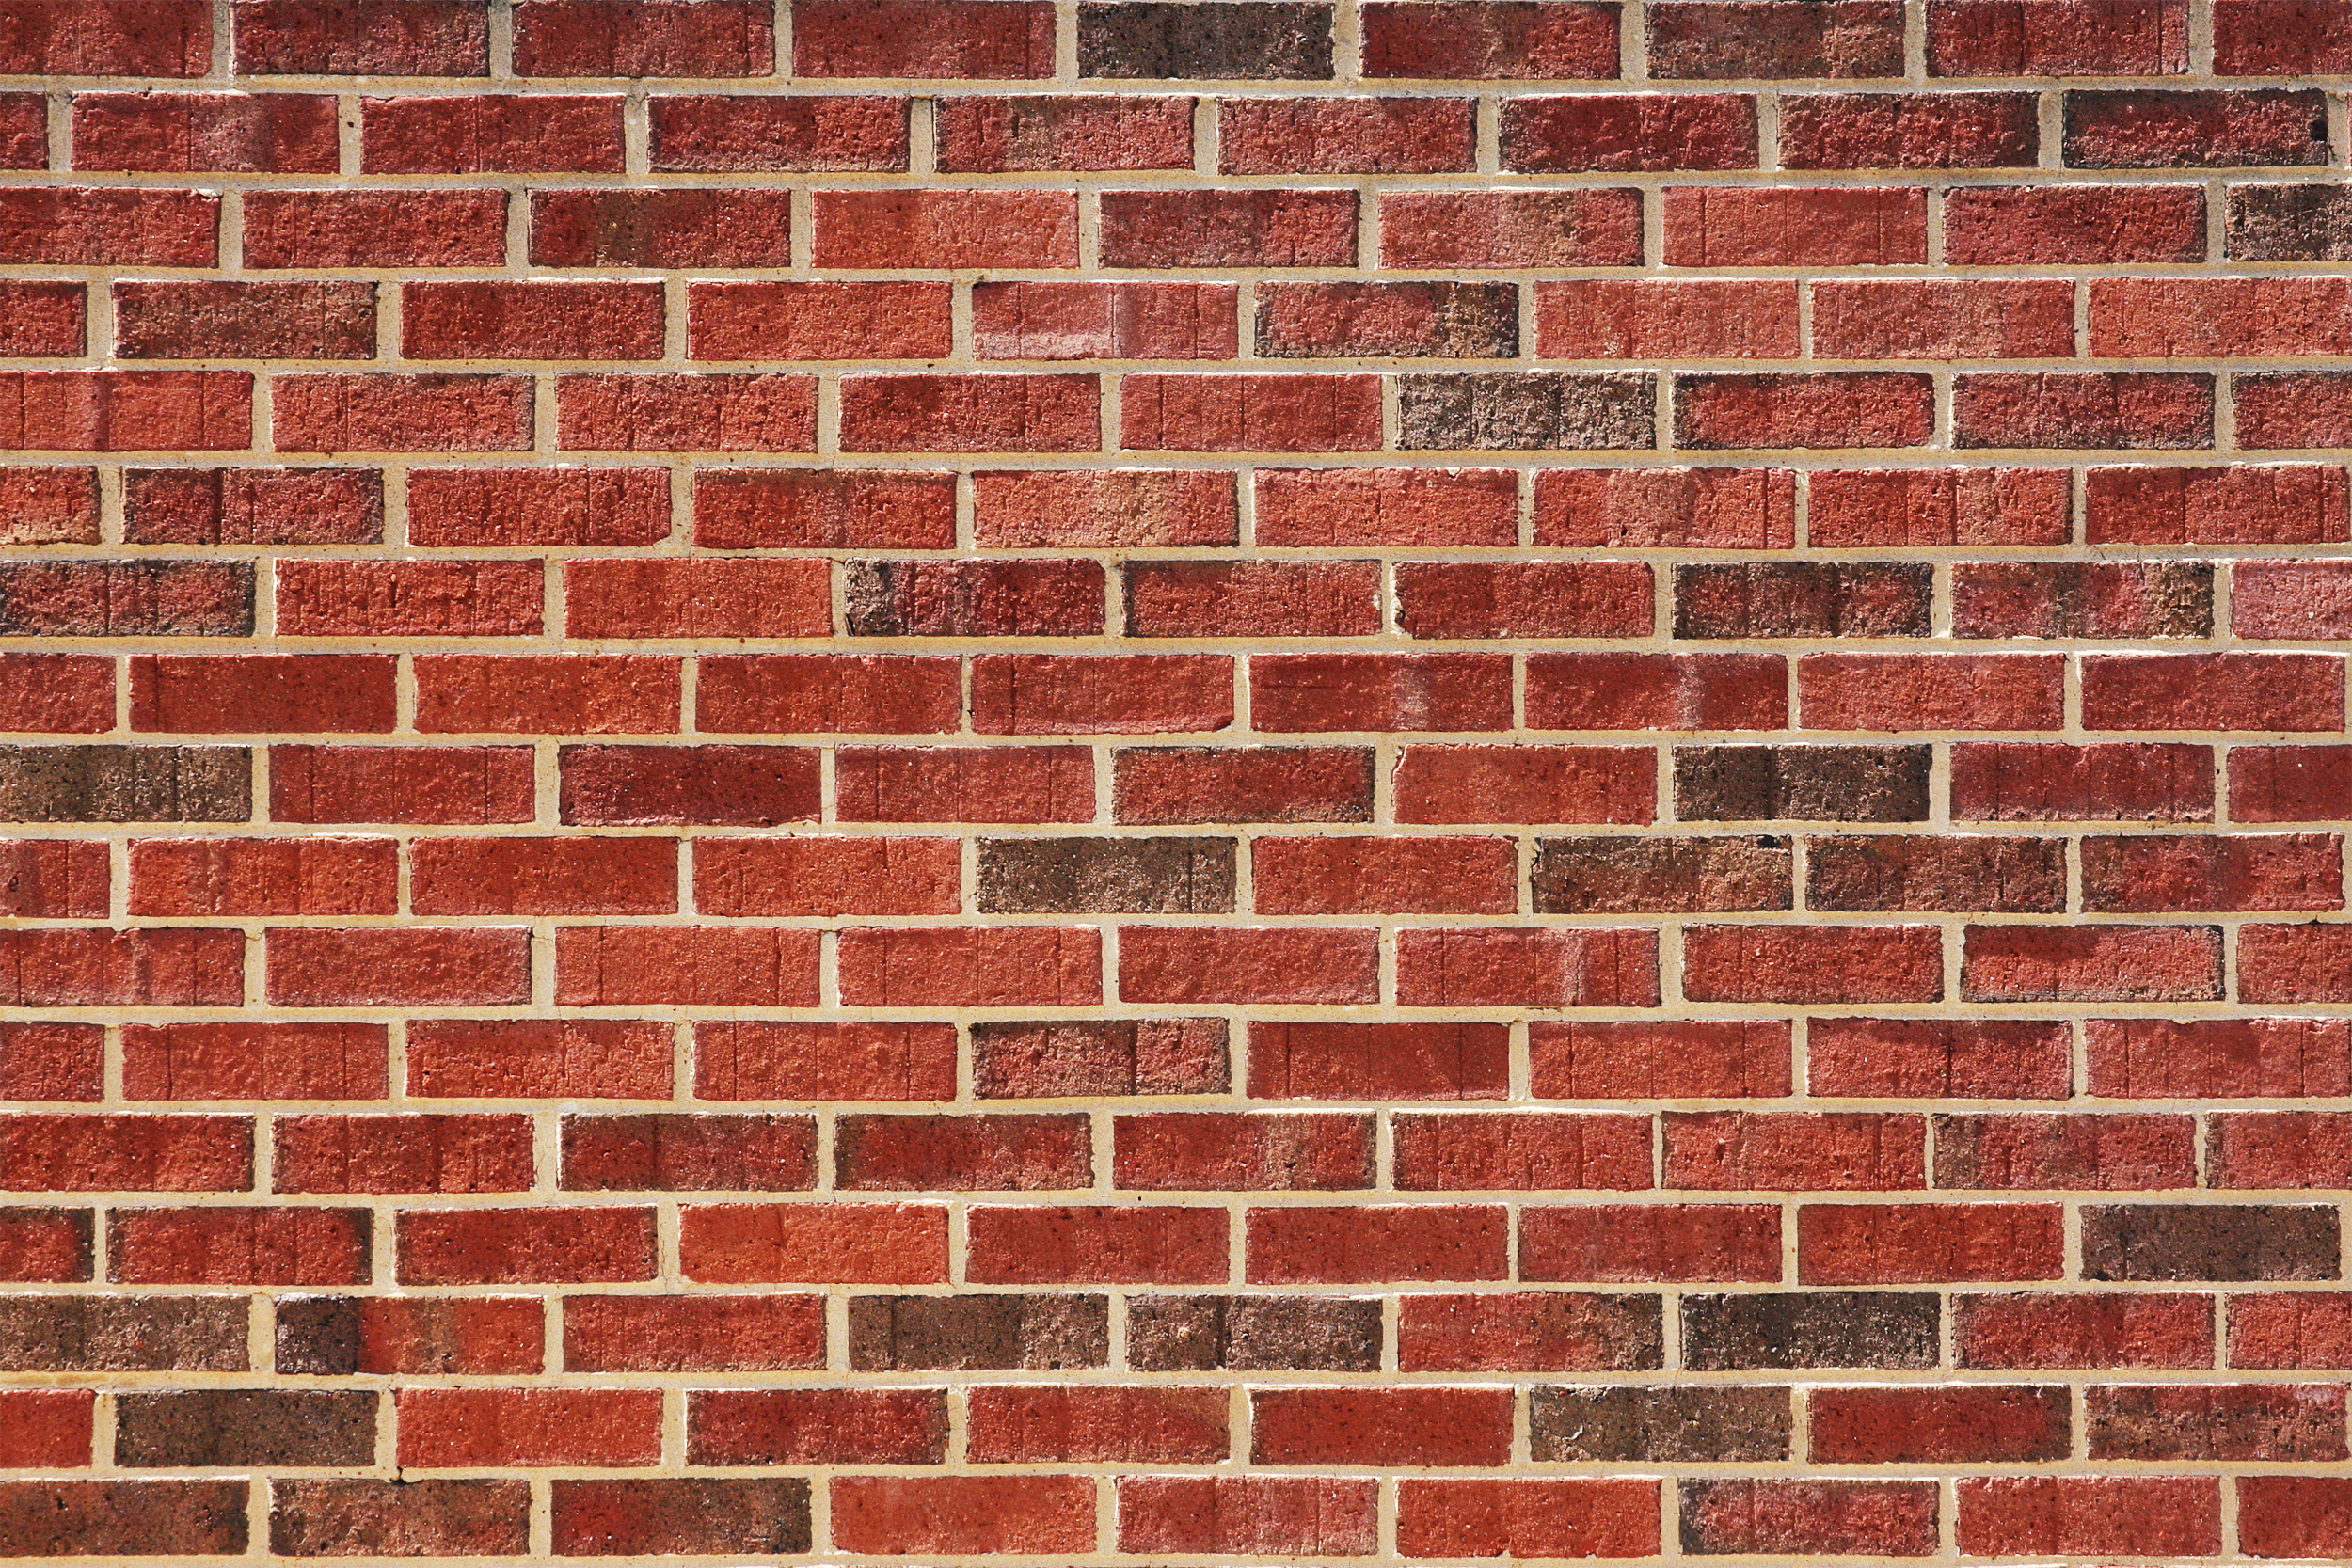 brick wall texture photoshop download